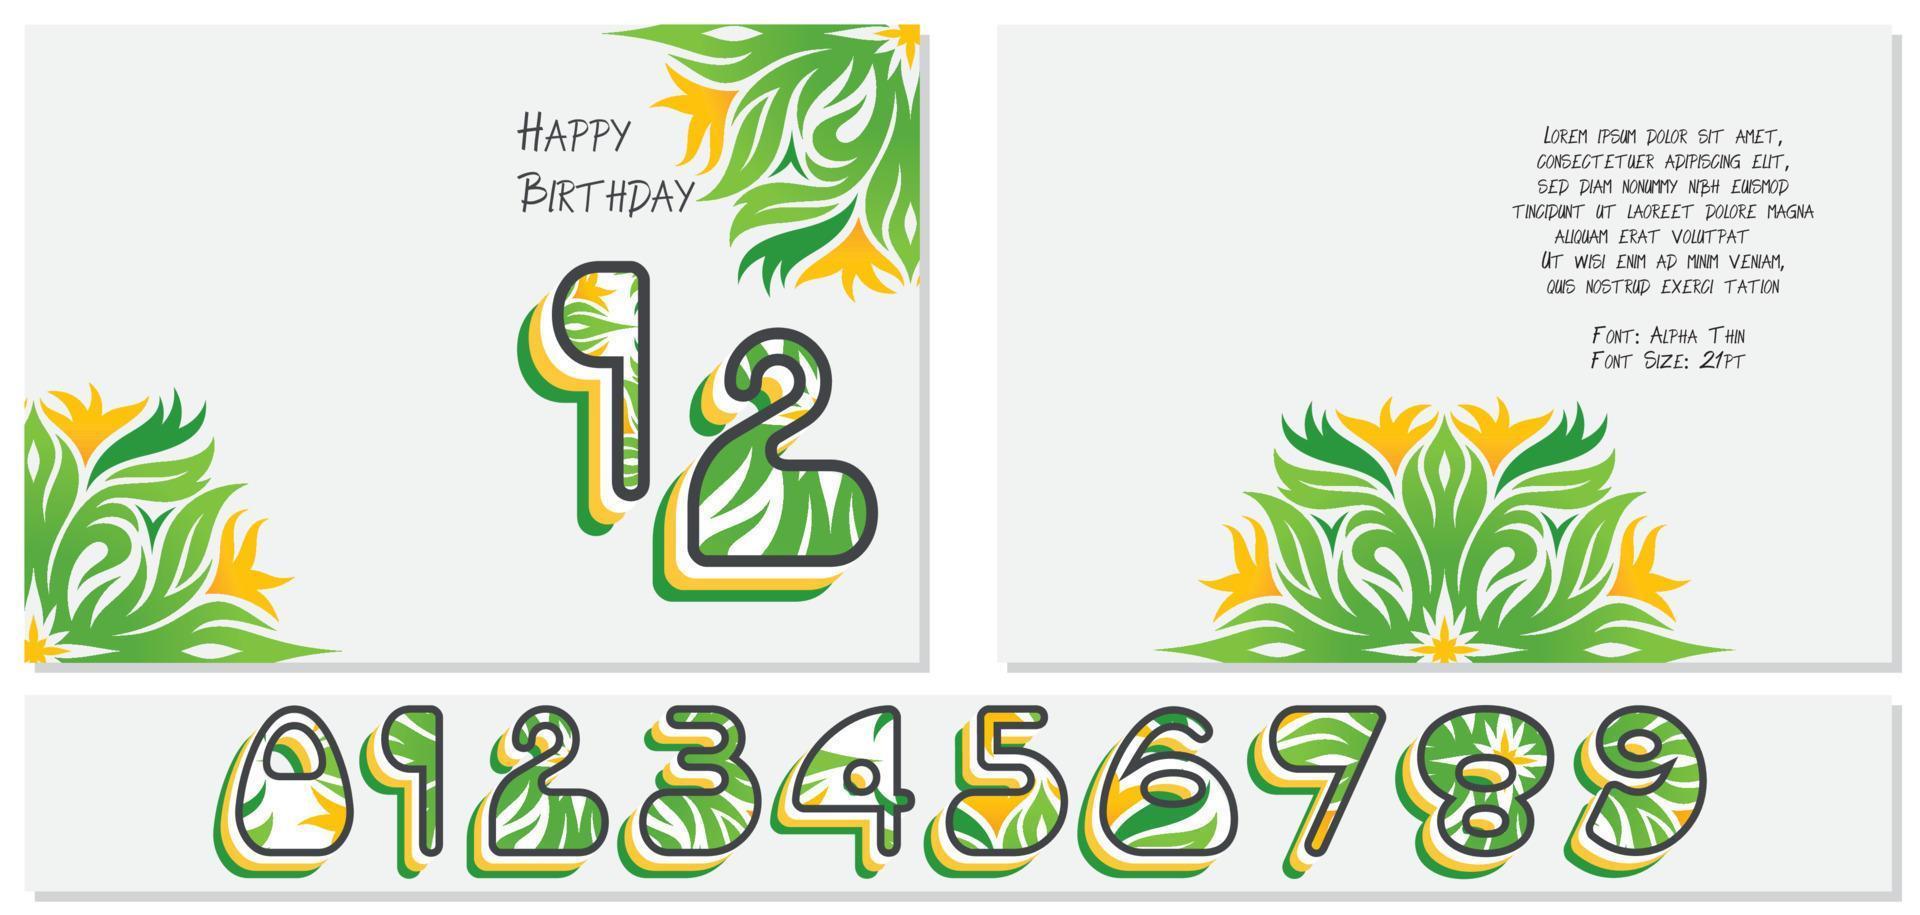 Birthday card. Floral vector illustration.